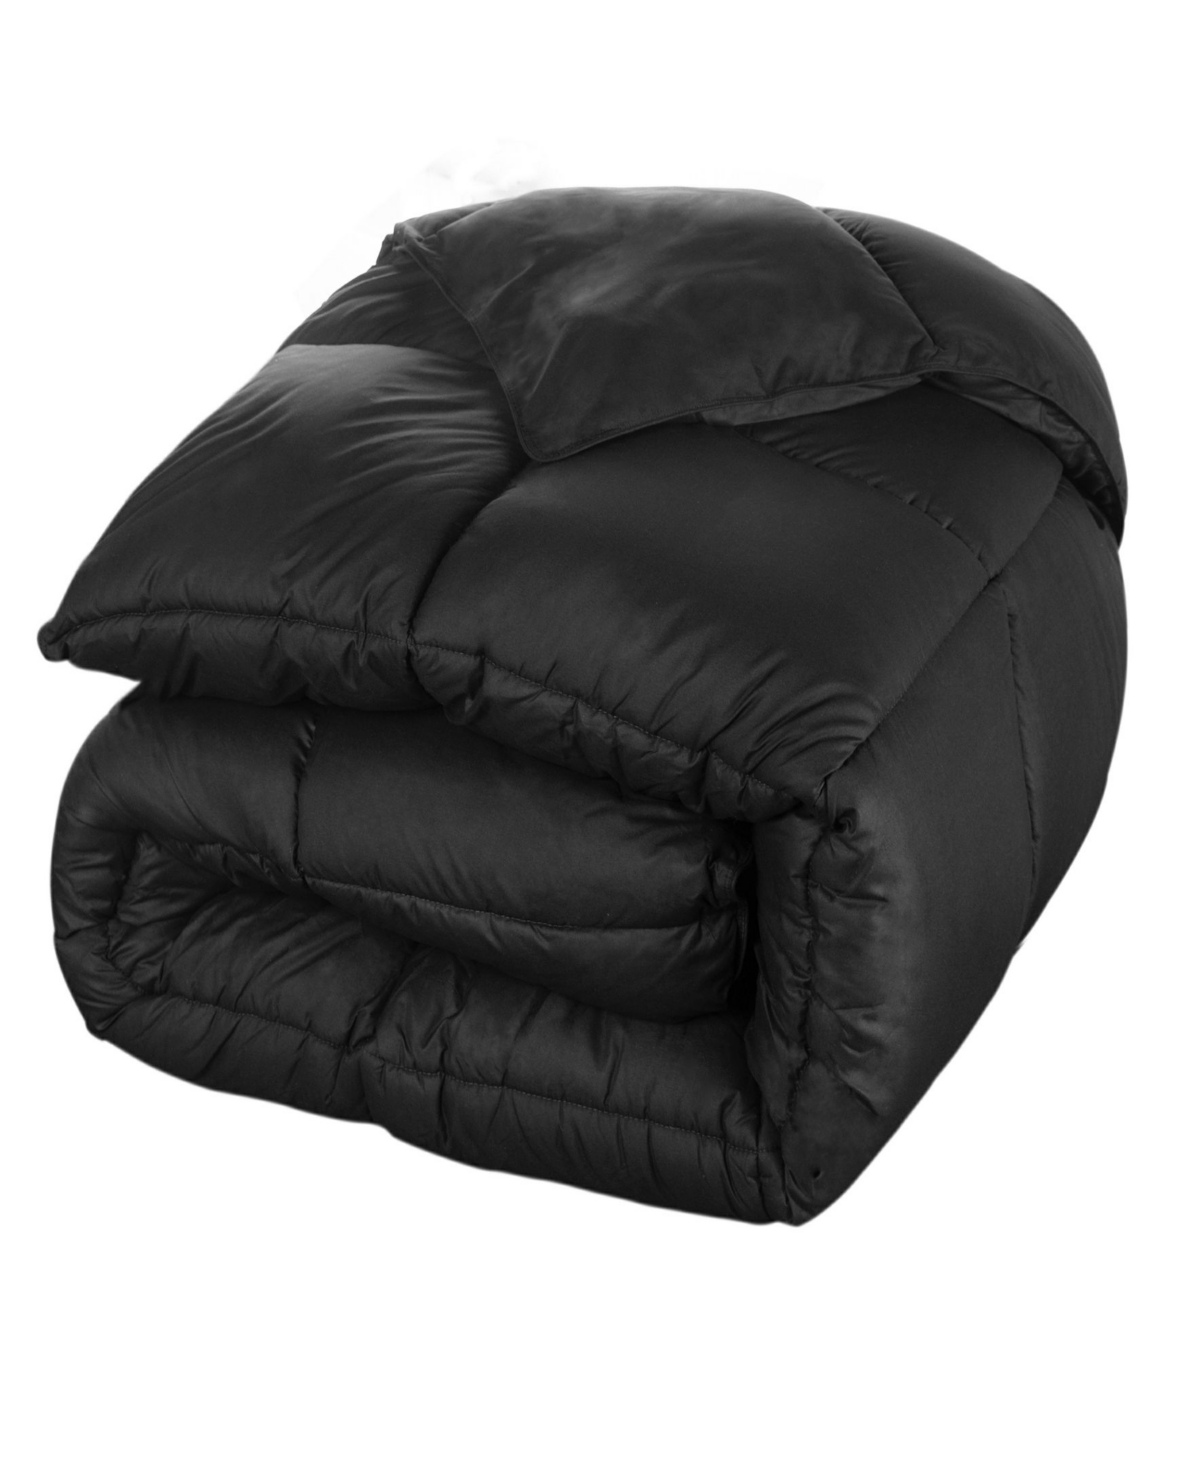 Superior Breathable All-season Comforter, Full/queen In Black